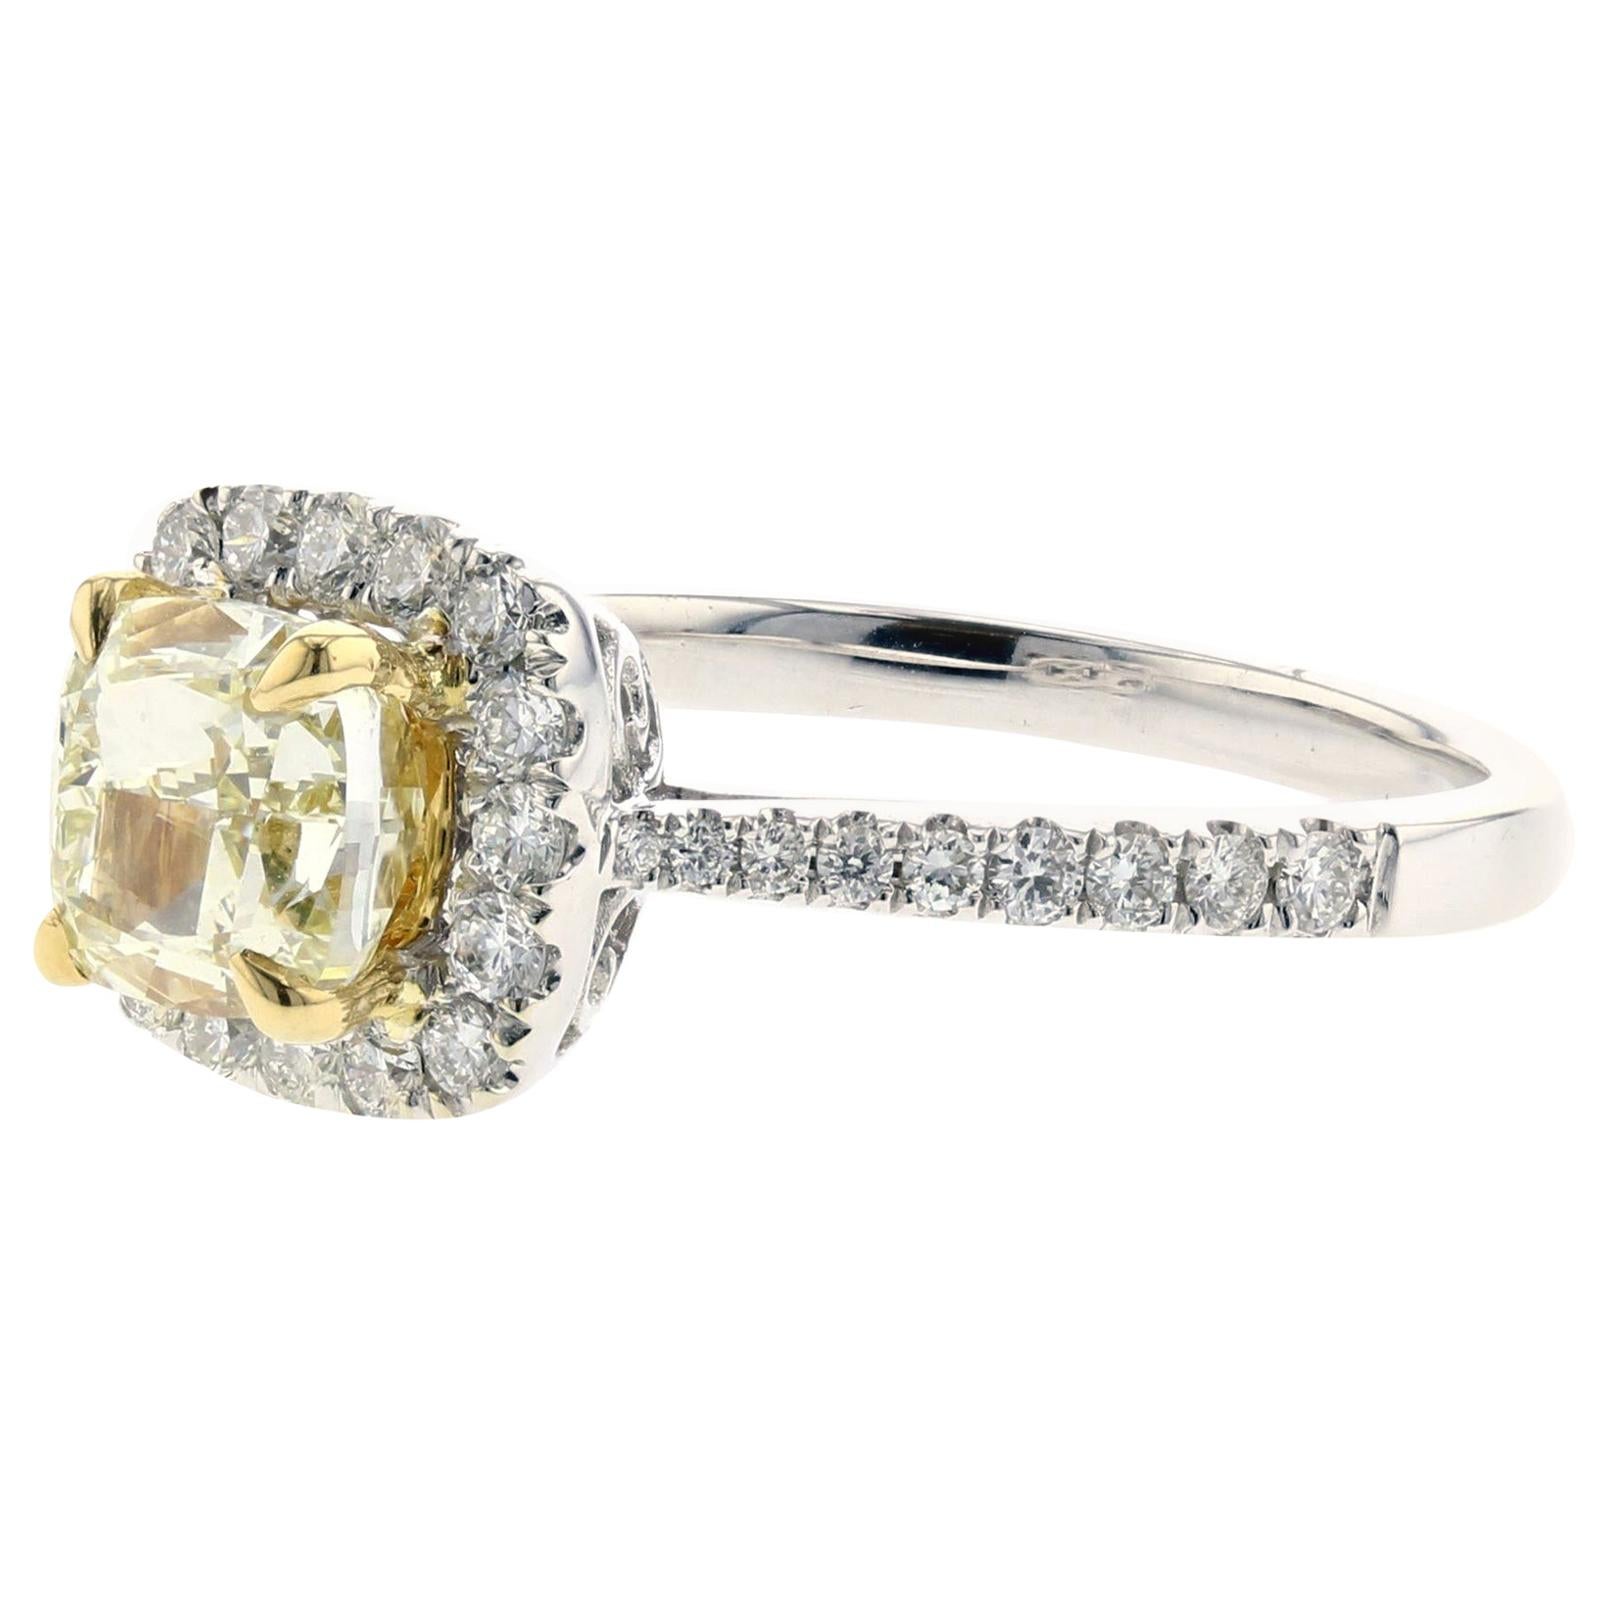 GIA Certified 1.55 Carat Cushion-Cut Diamond Engagement Ring